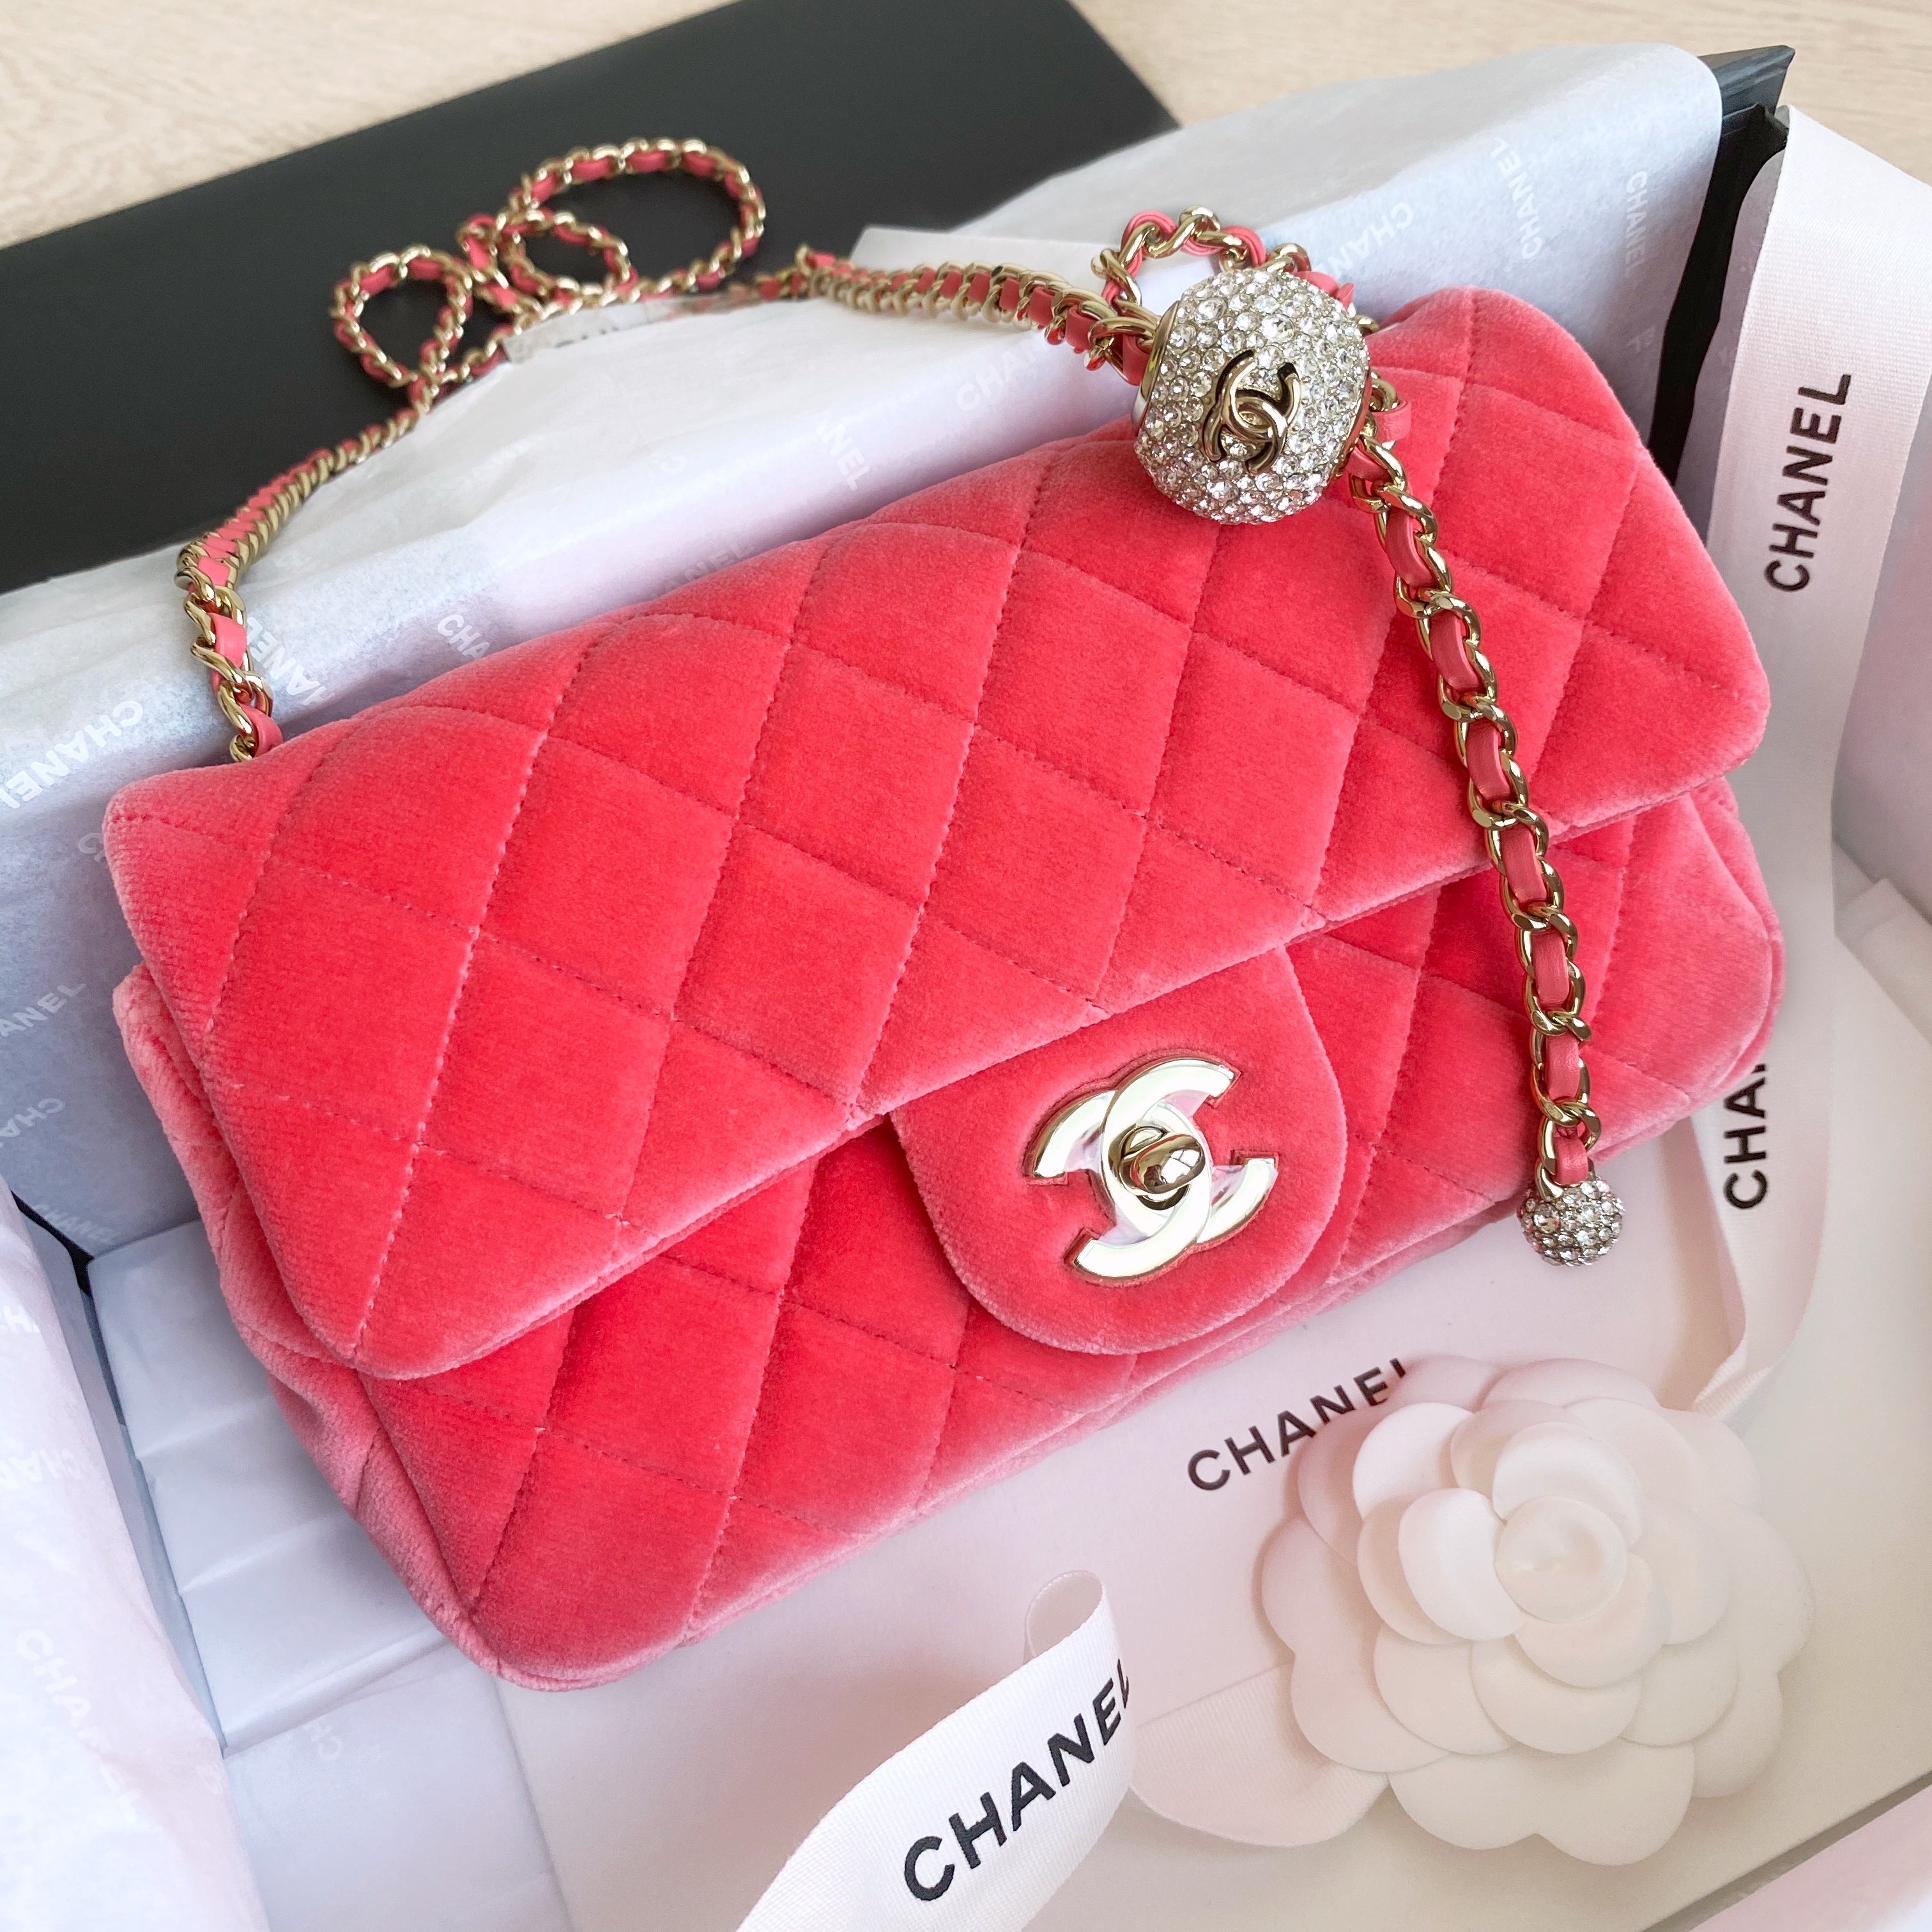 Chanel 21p Mini Rectangular bag caramel lambskin